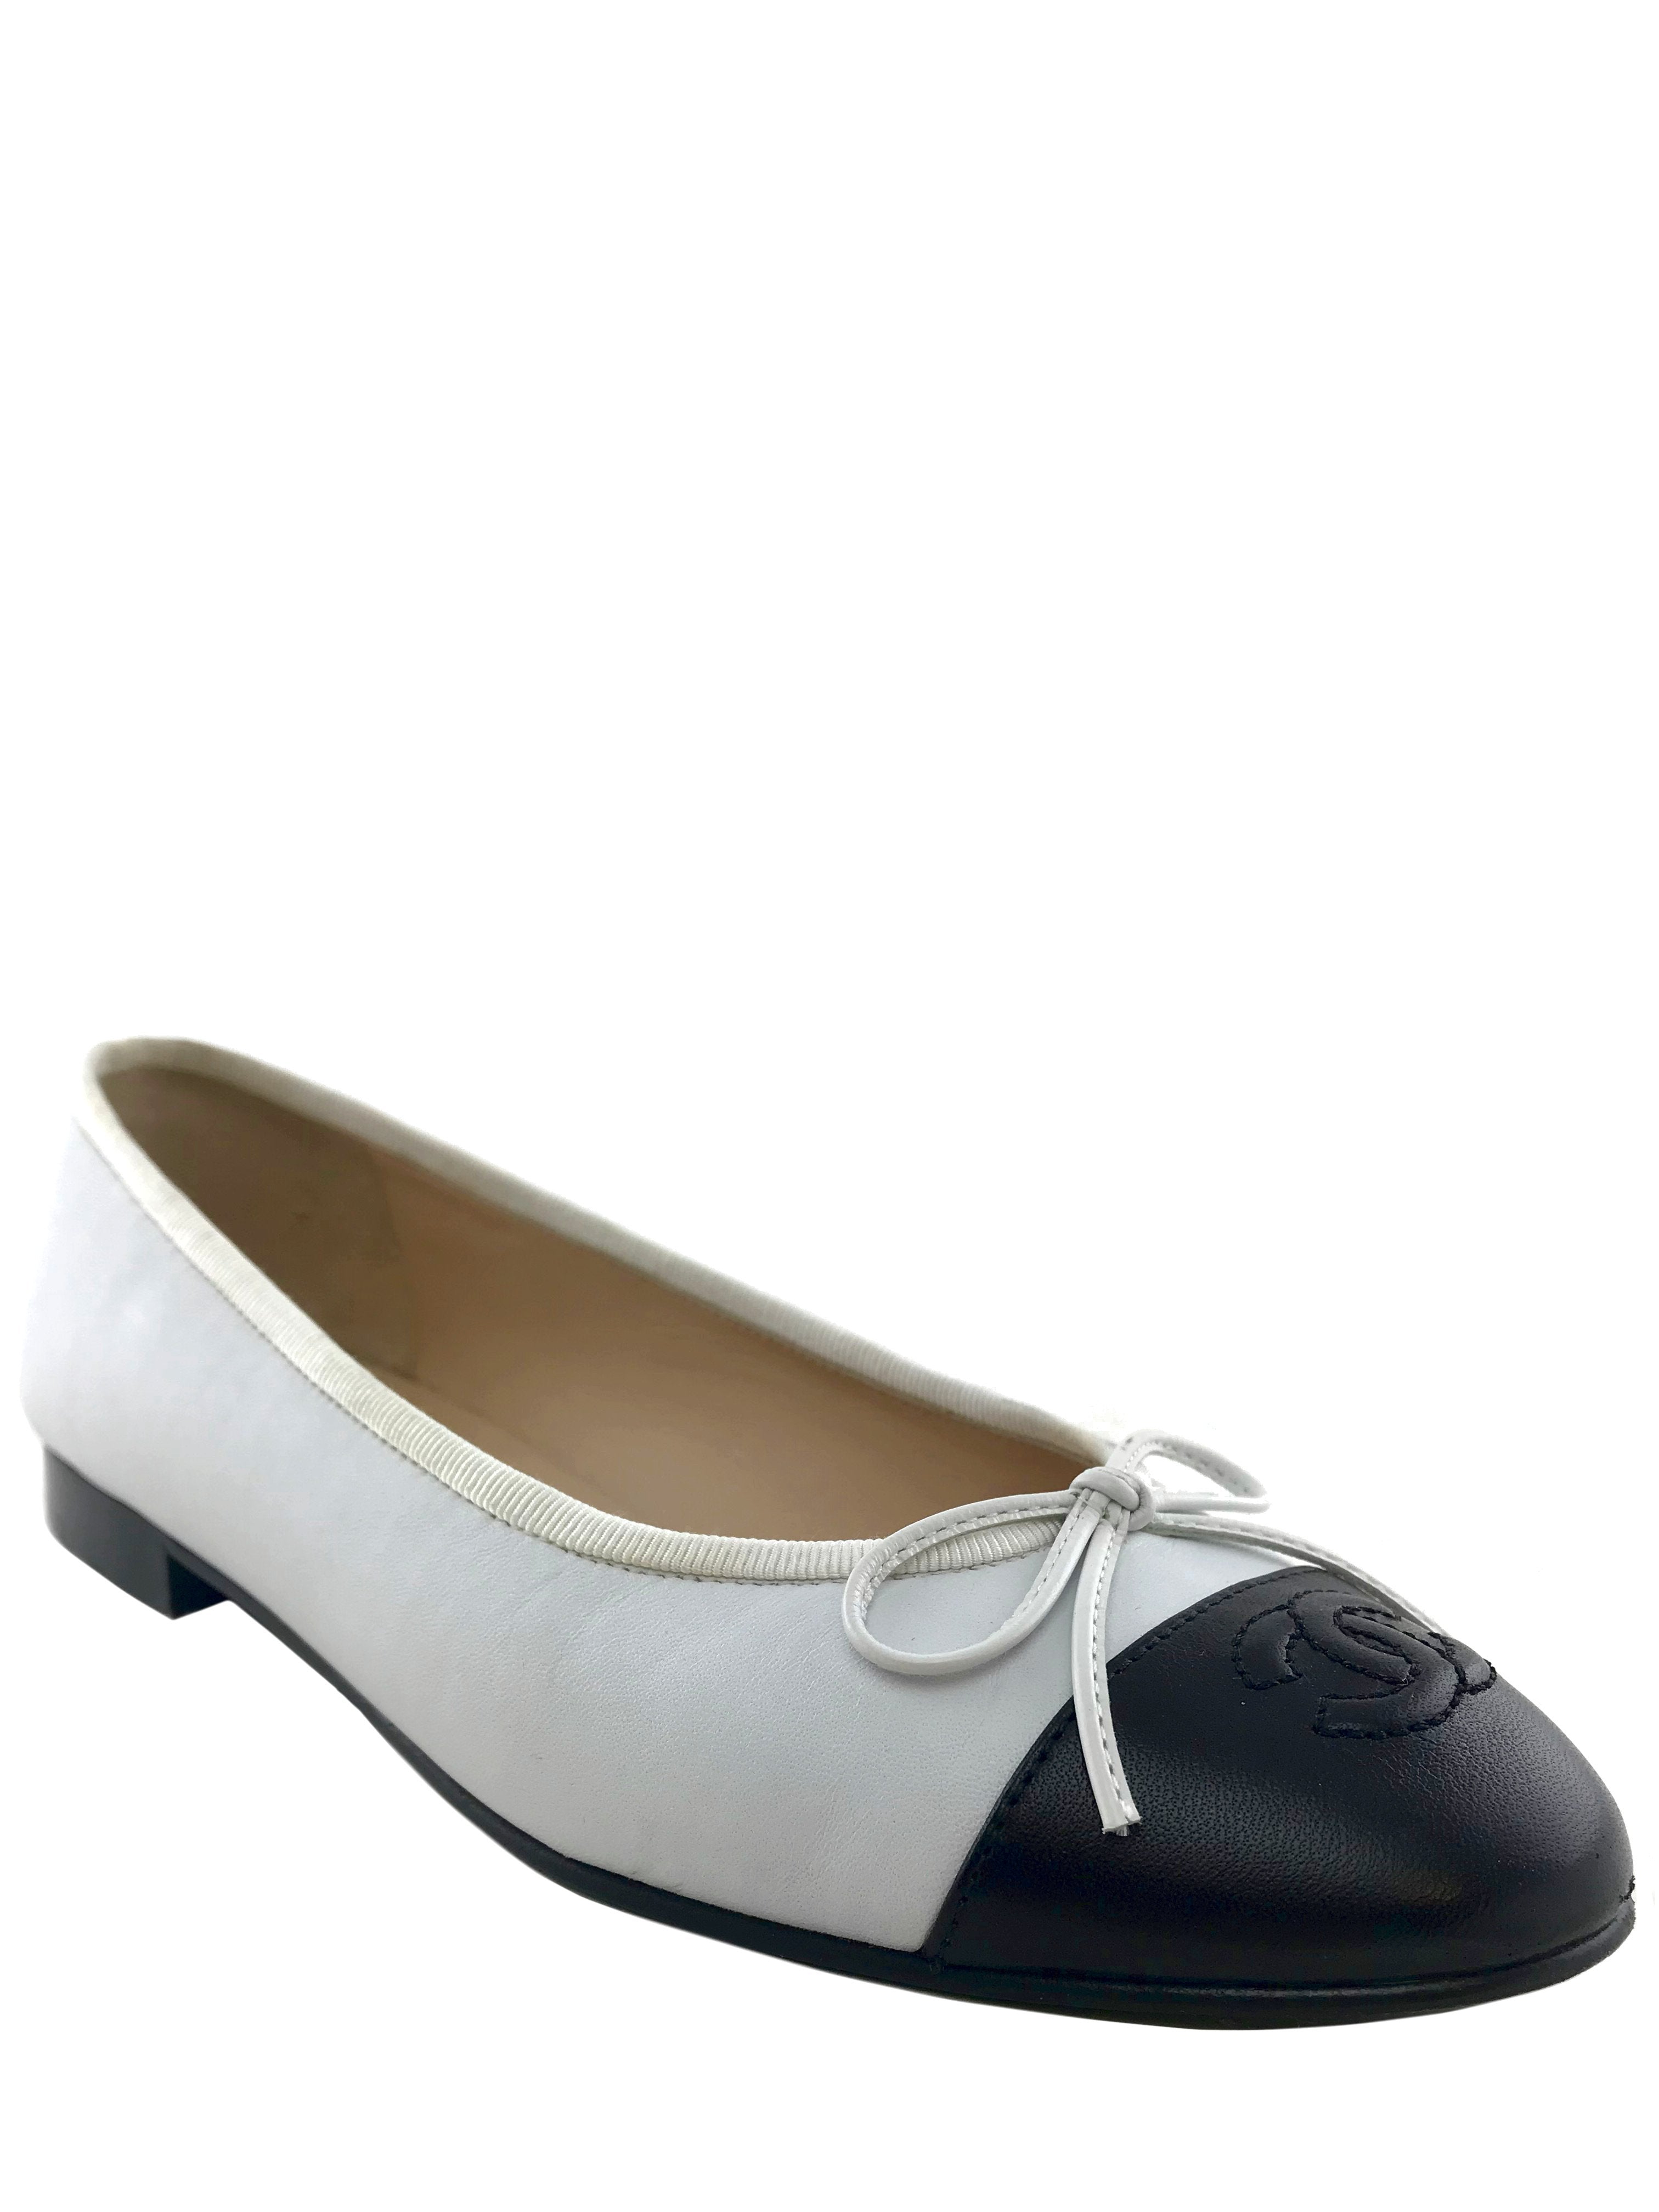 Chanel CC Cap Toe Leather Ballet Flats Size 8